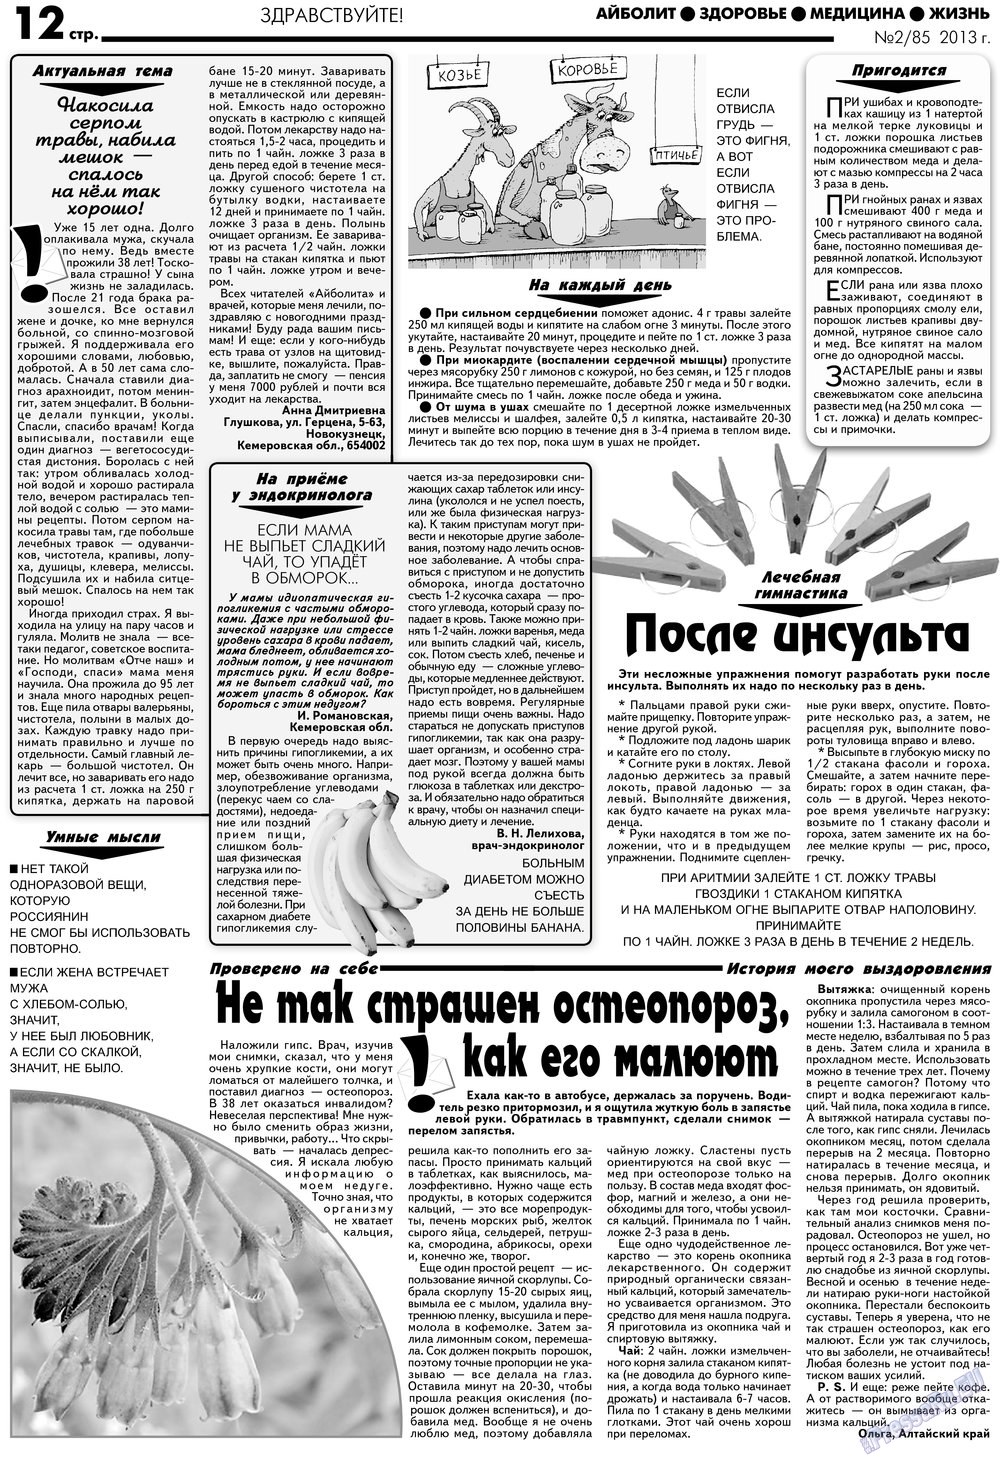 АйБолит (газета). 2013 год, номер 2, стр. 12